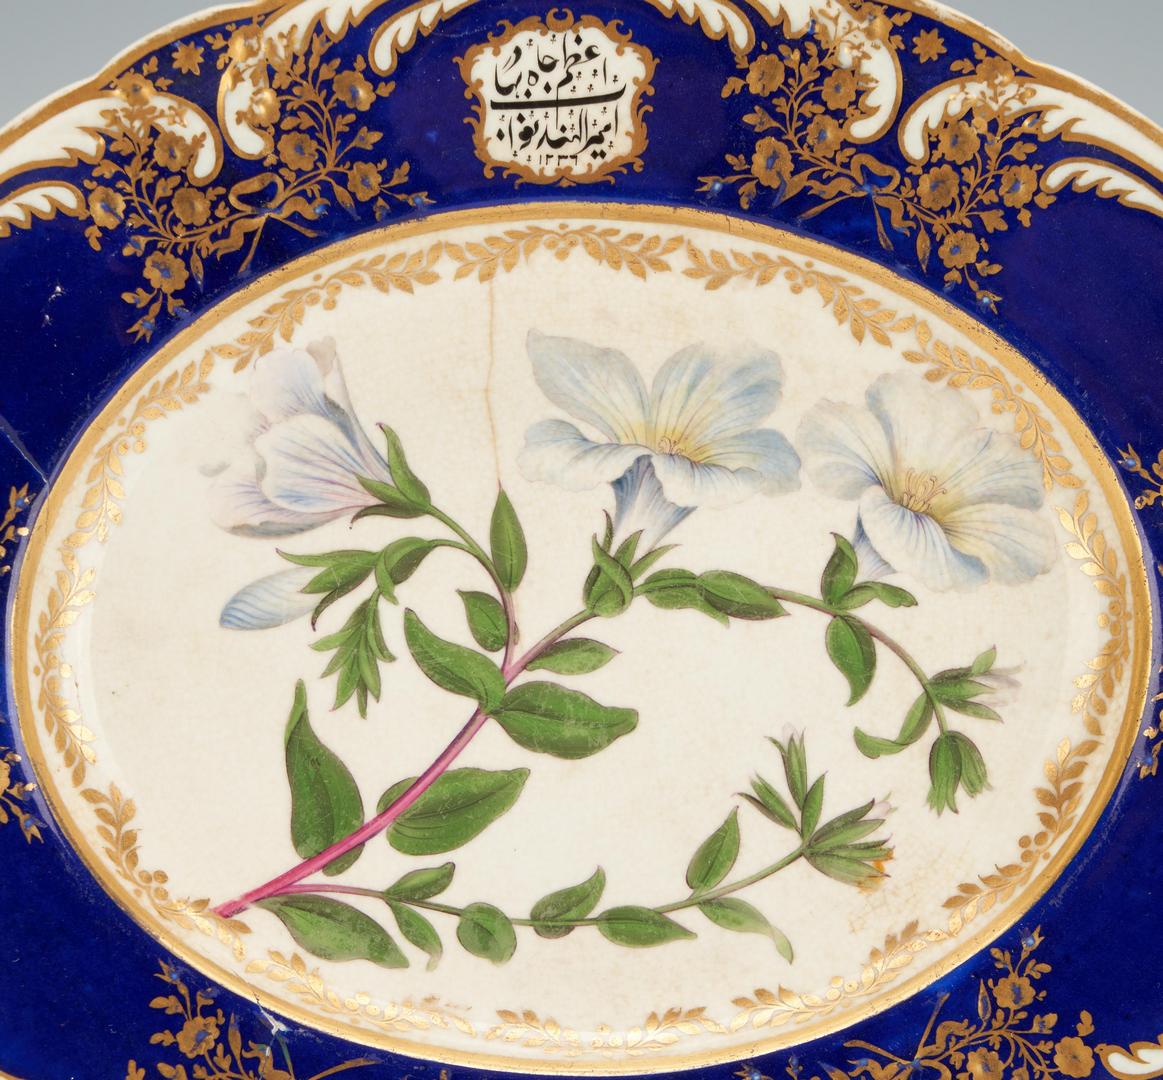 Lot 347: Three (3) European Export Ceramic Plates for Arab or Islamic Market